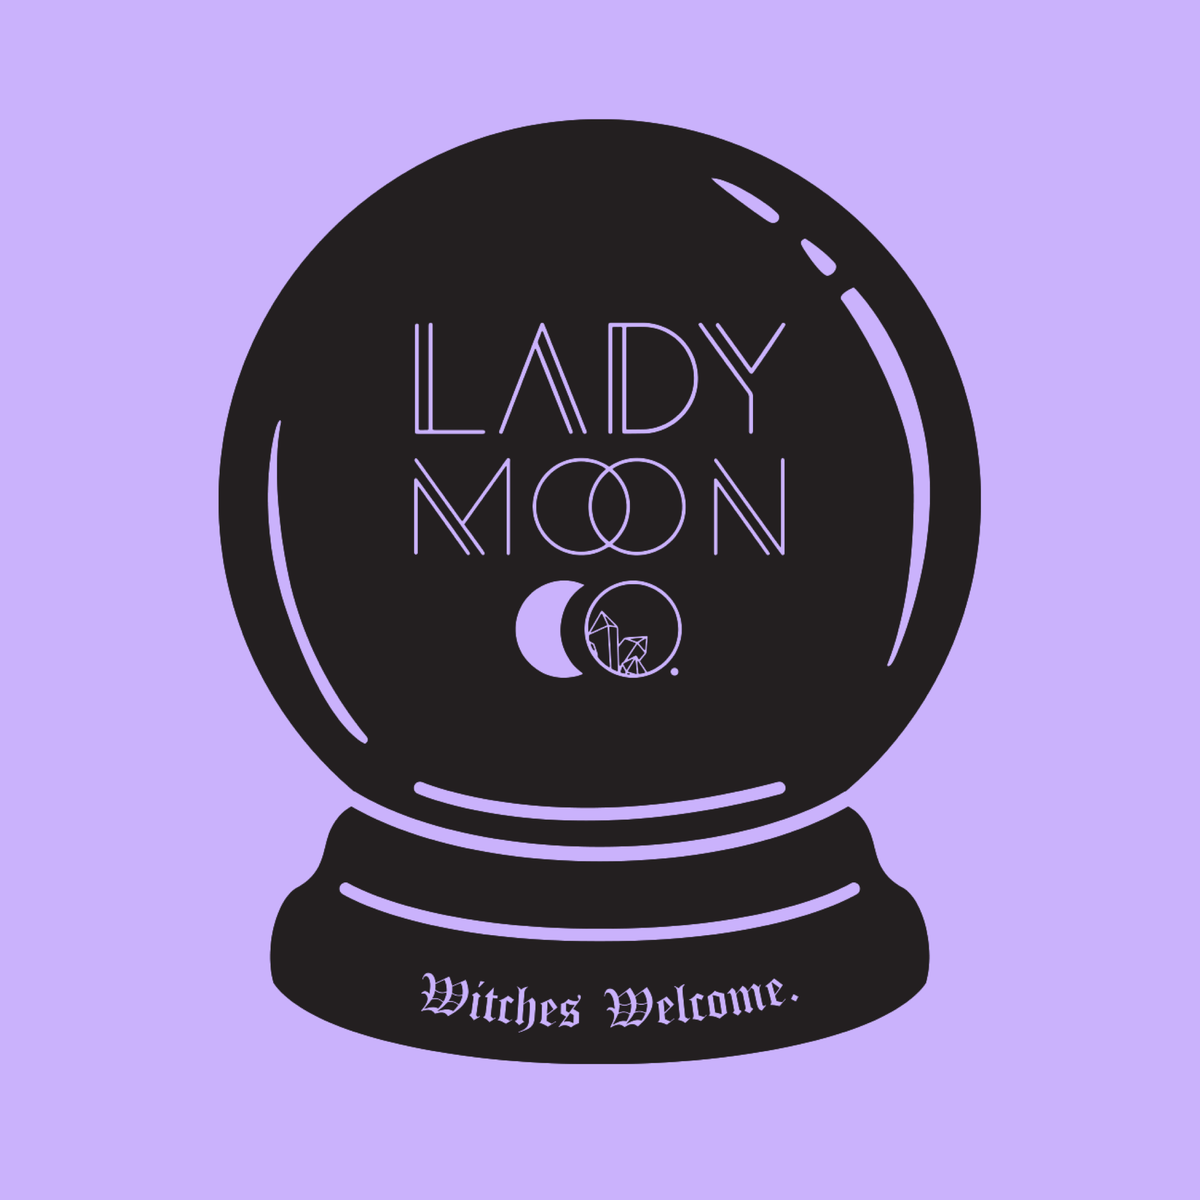 Lady Moon Co logo